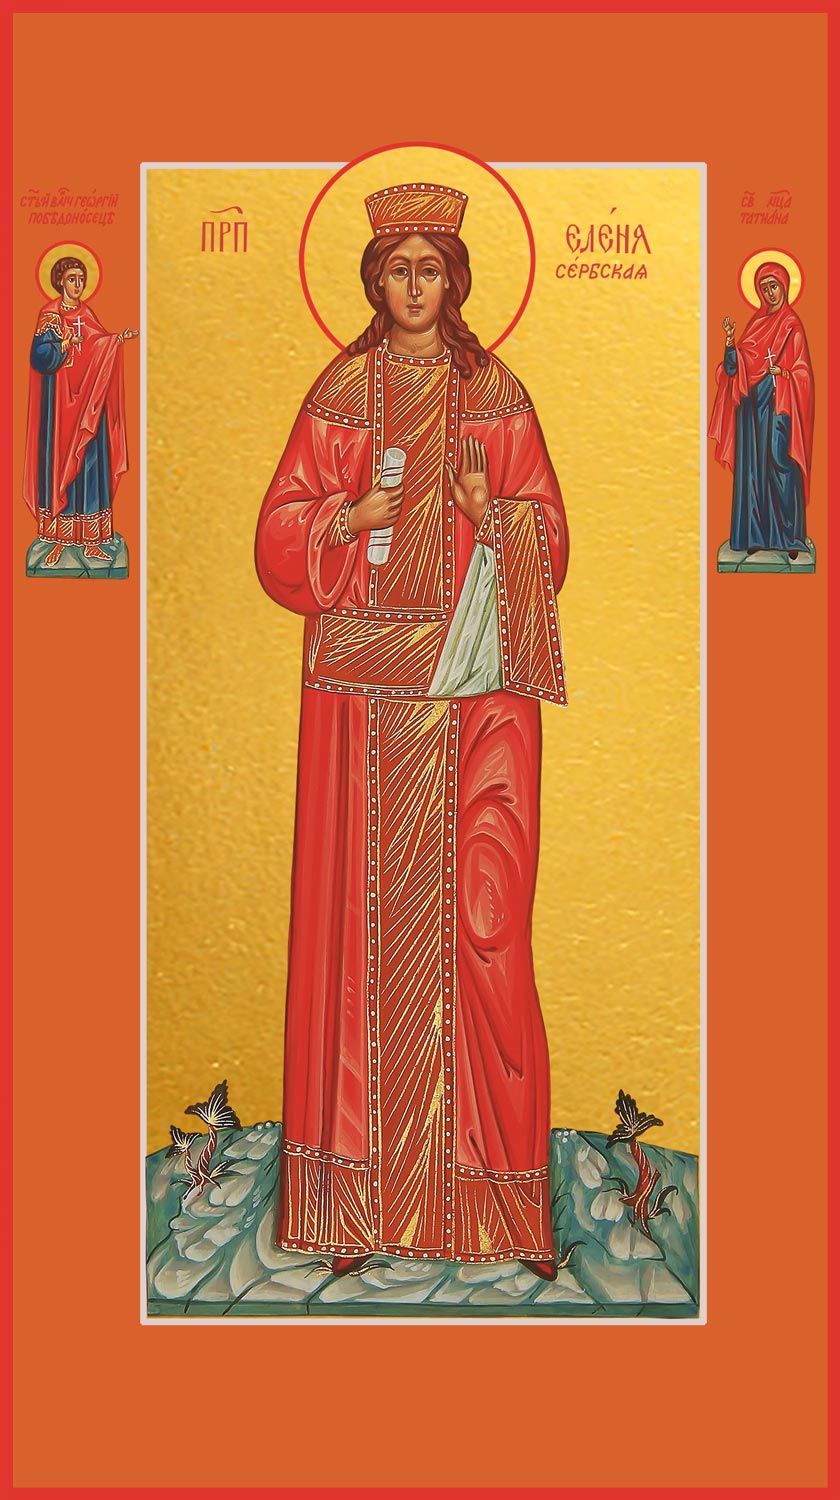 Мерная икона Елена Сербская благоверная княгиня